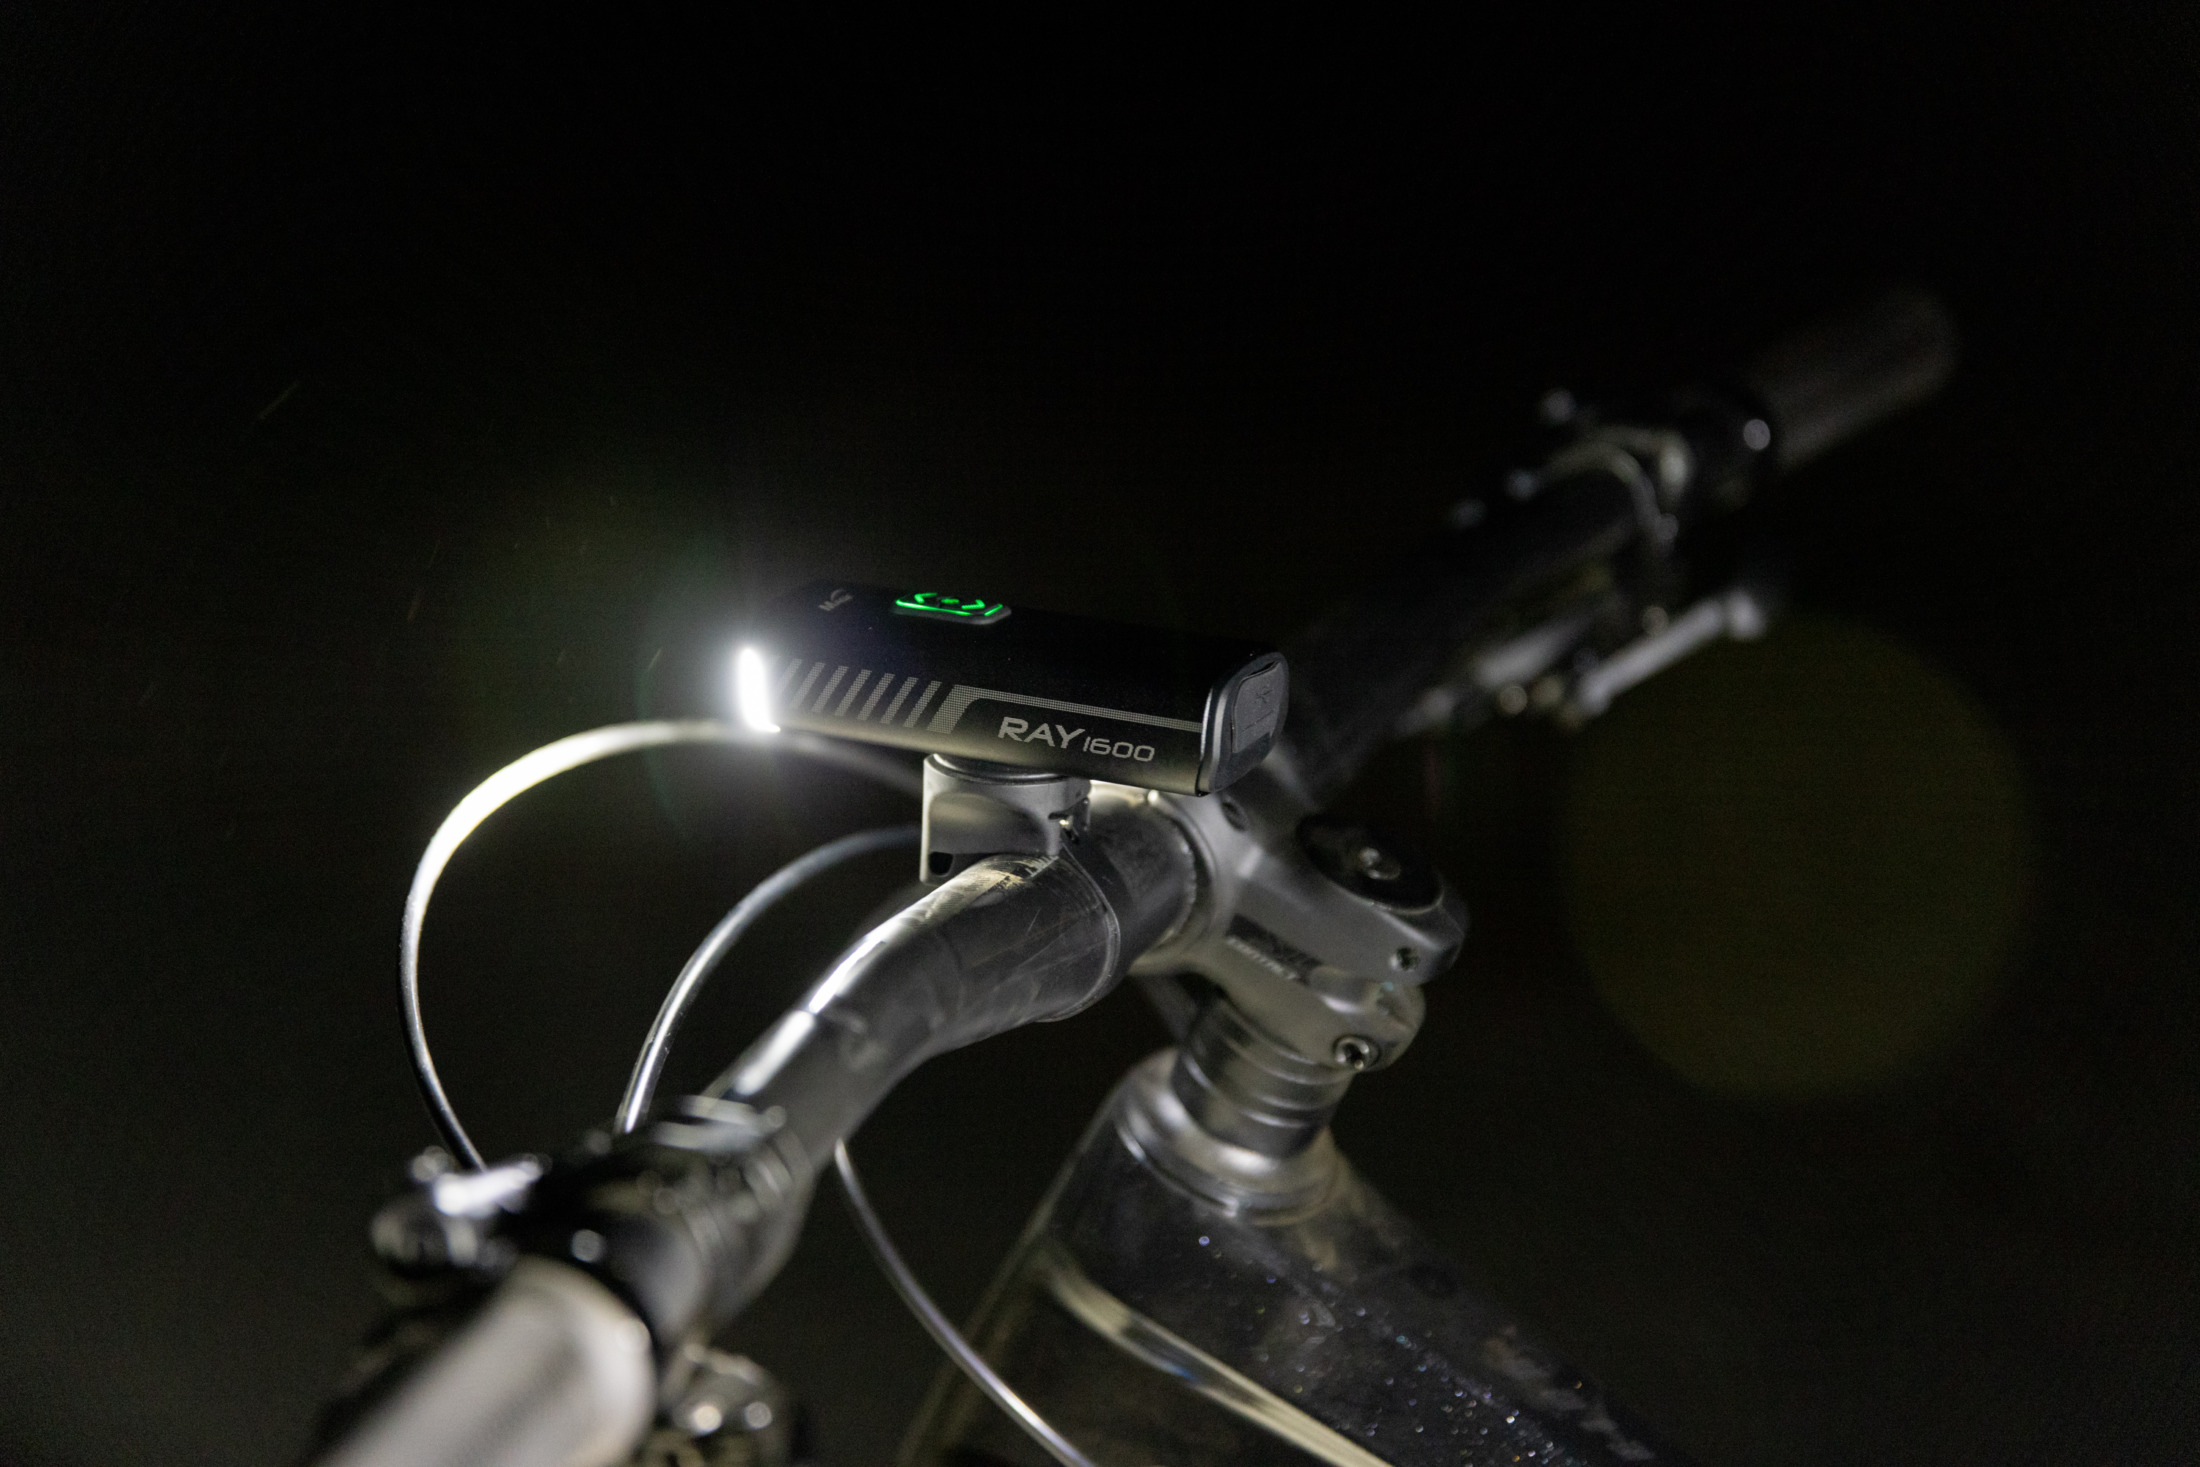 RAY 1600 BICYCLE LIGHT